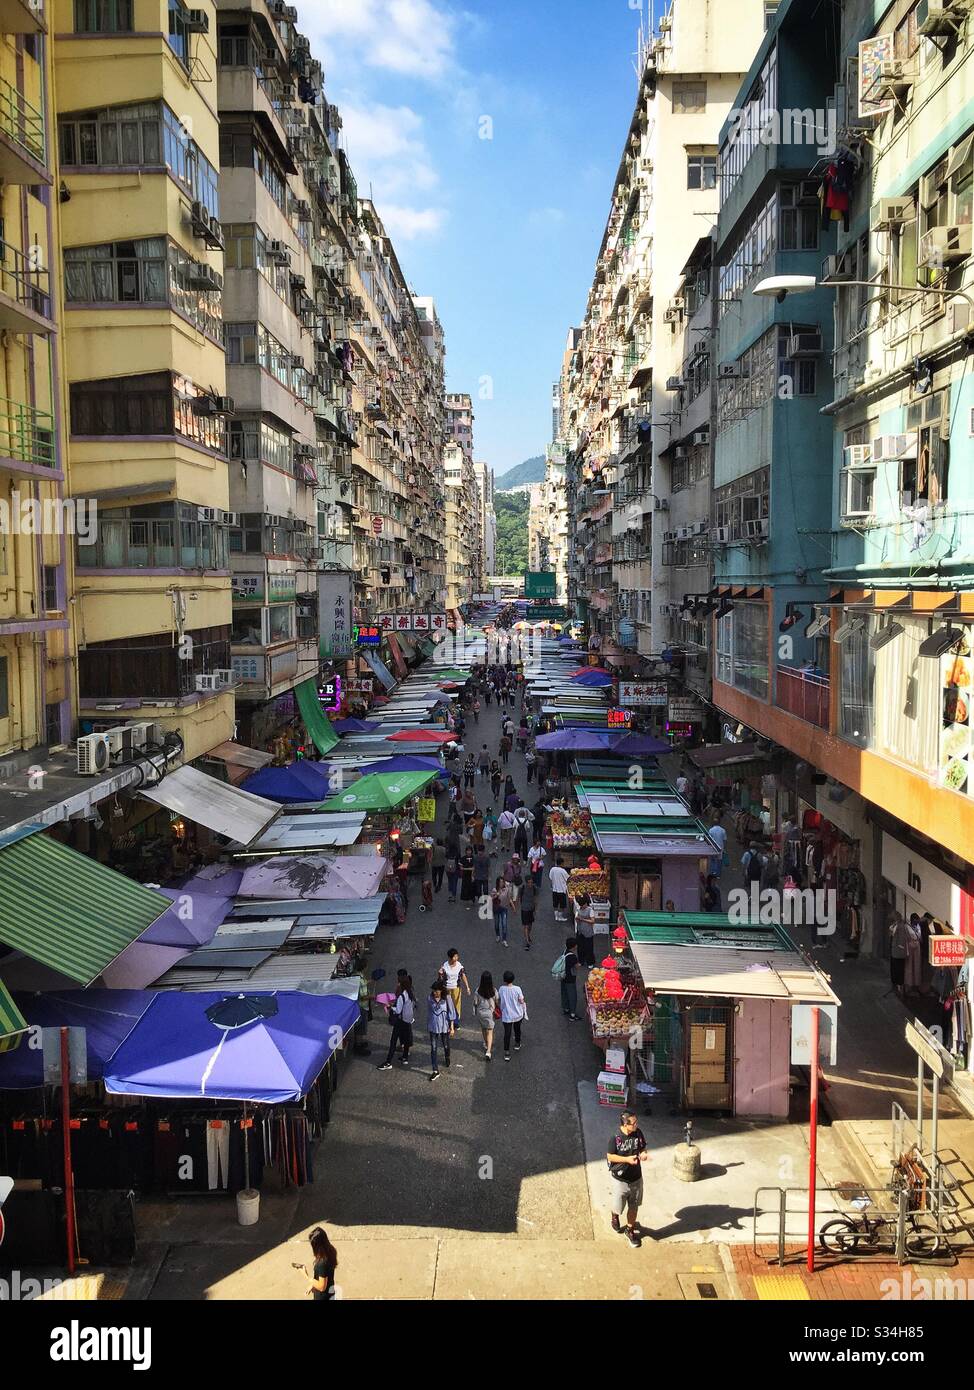 Le marché des femmes, FA Yuen Street, Mong Kok, Kowloon, Hong Kong Banque D'Images